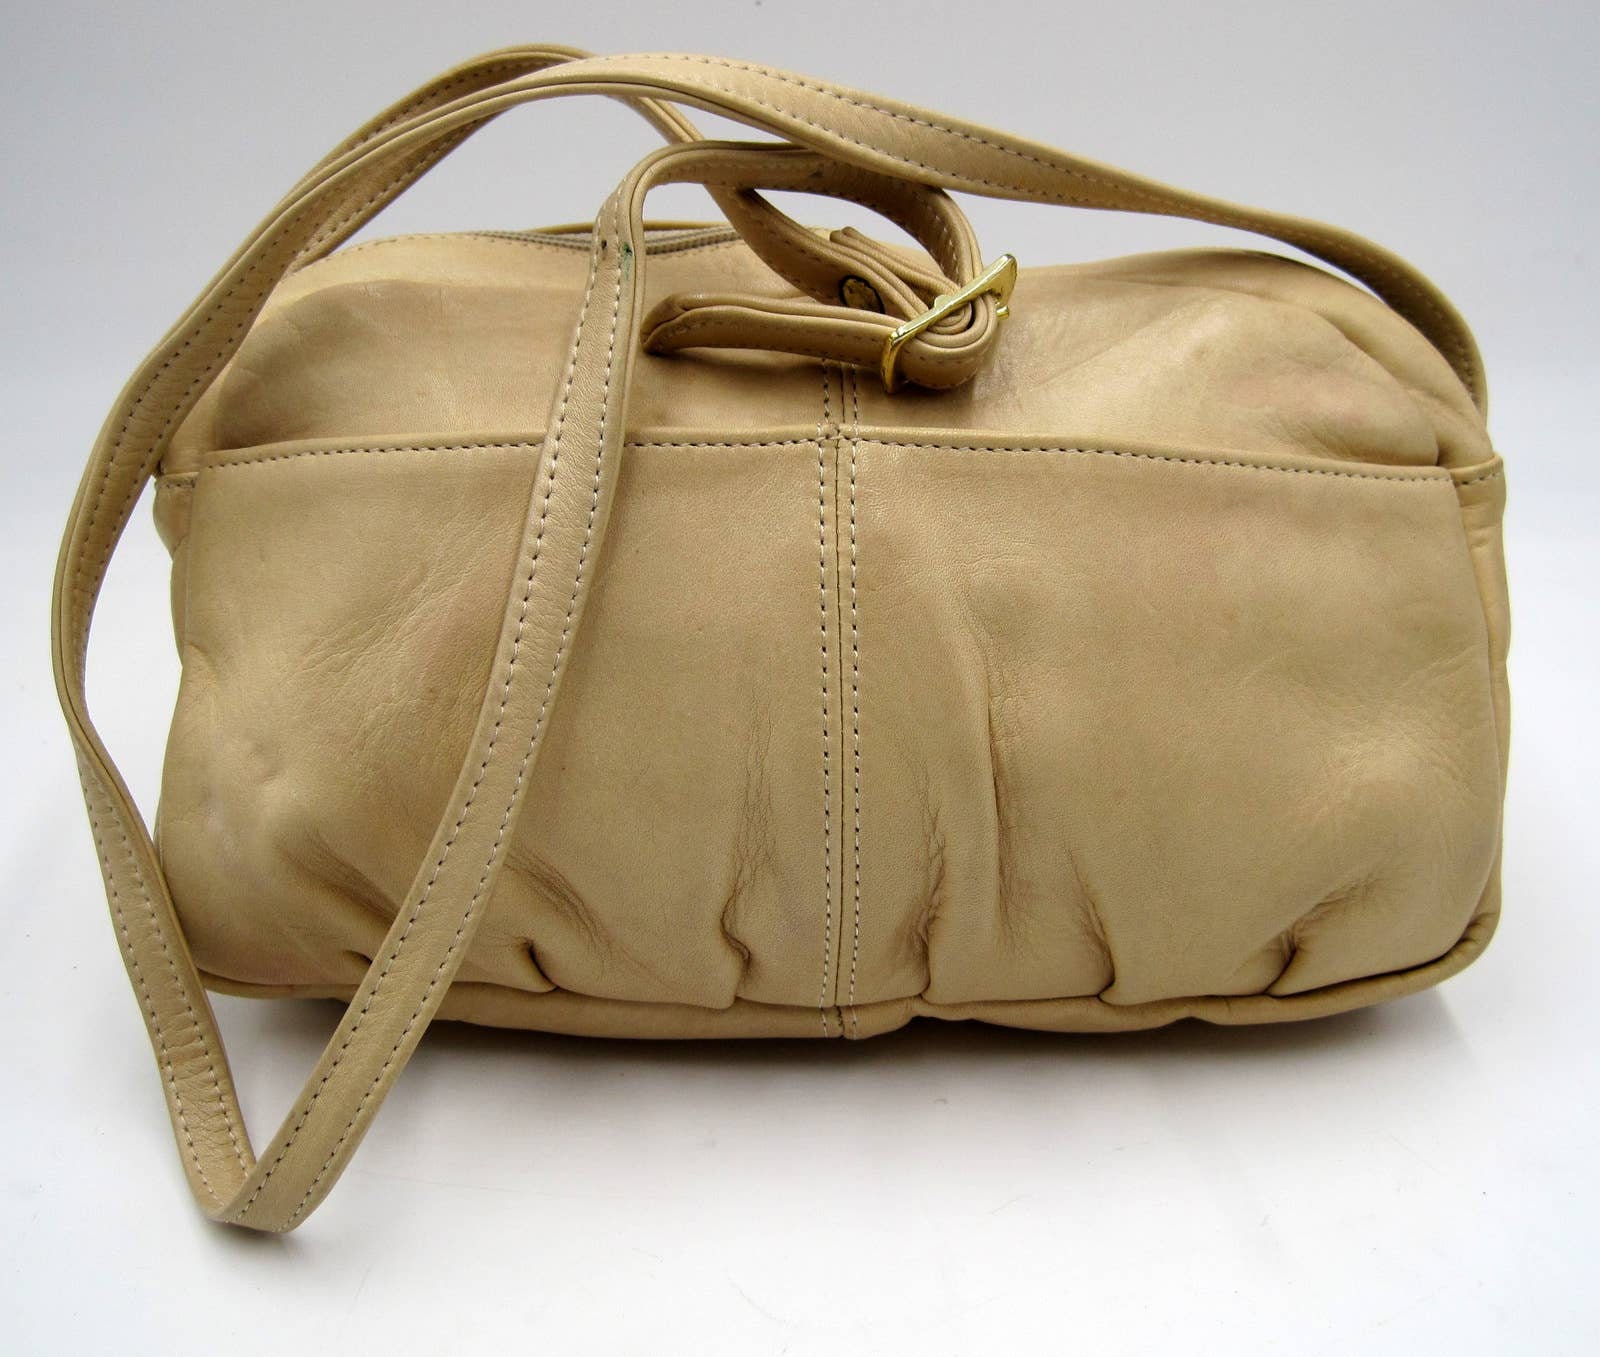 Satchel Fringeless - Roomy Crossbody Bag, Authentic Vintage